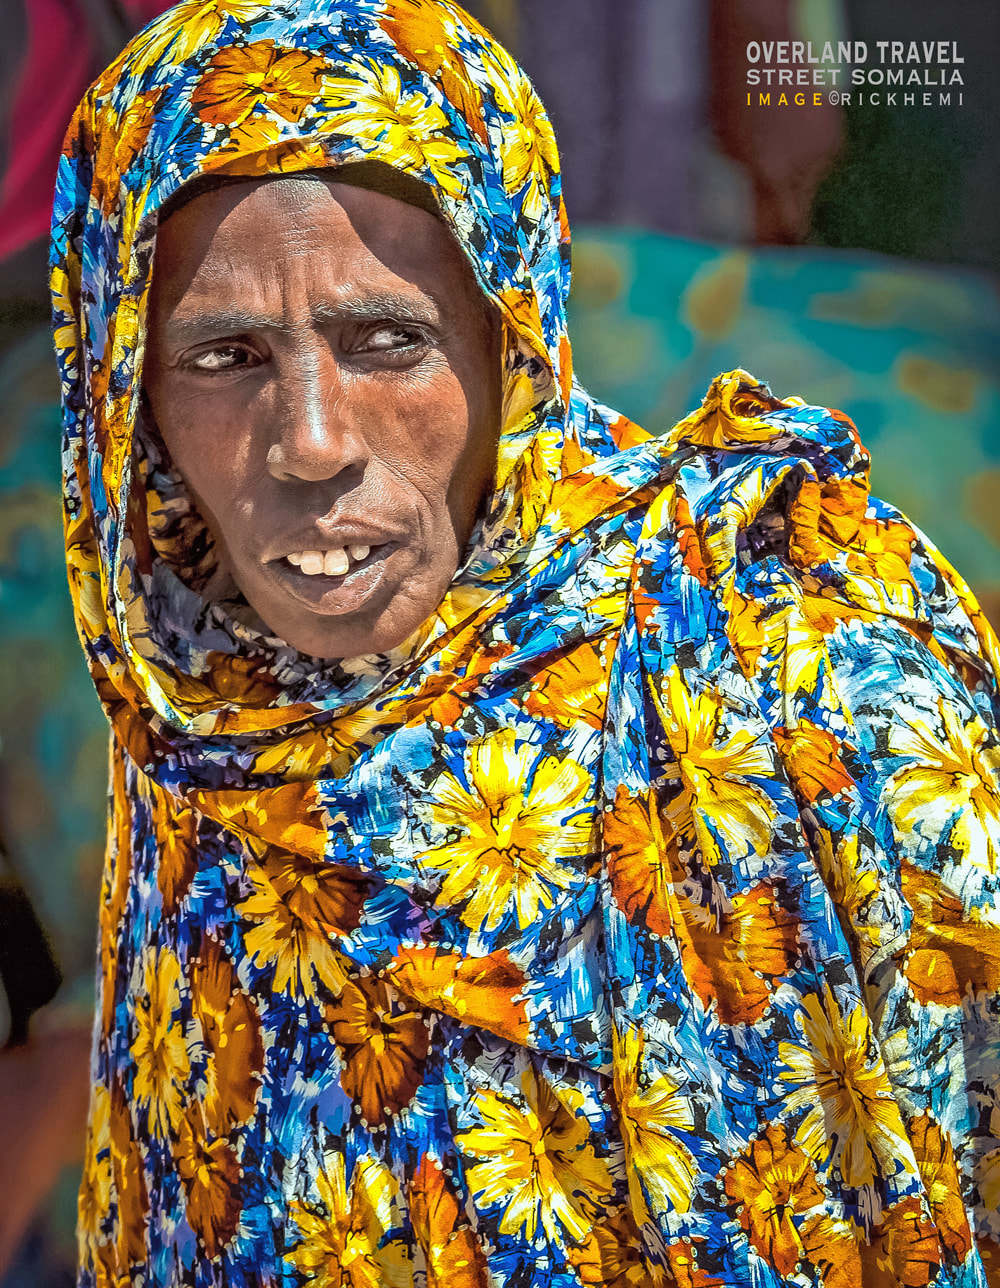 solo overland travel Somalia, village street snap Somalia, image by Rick Hemi